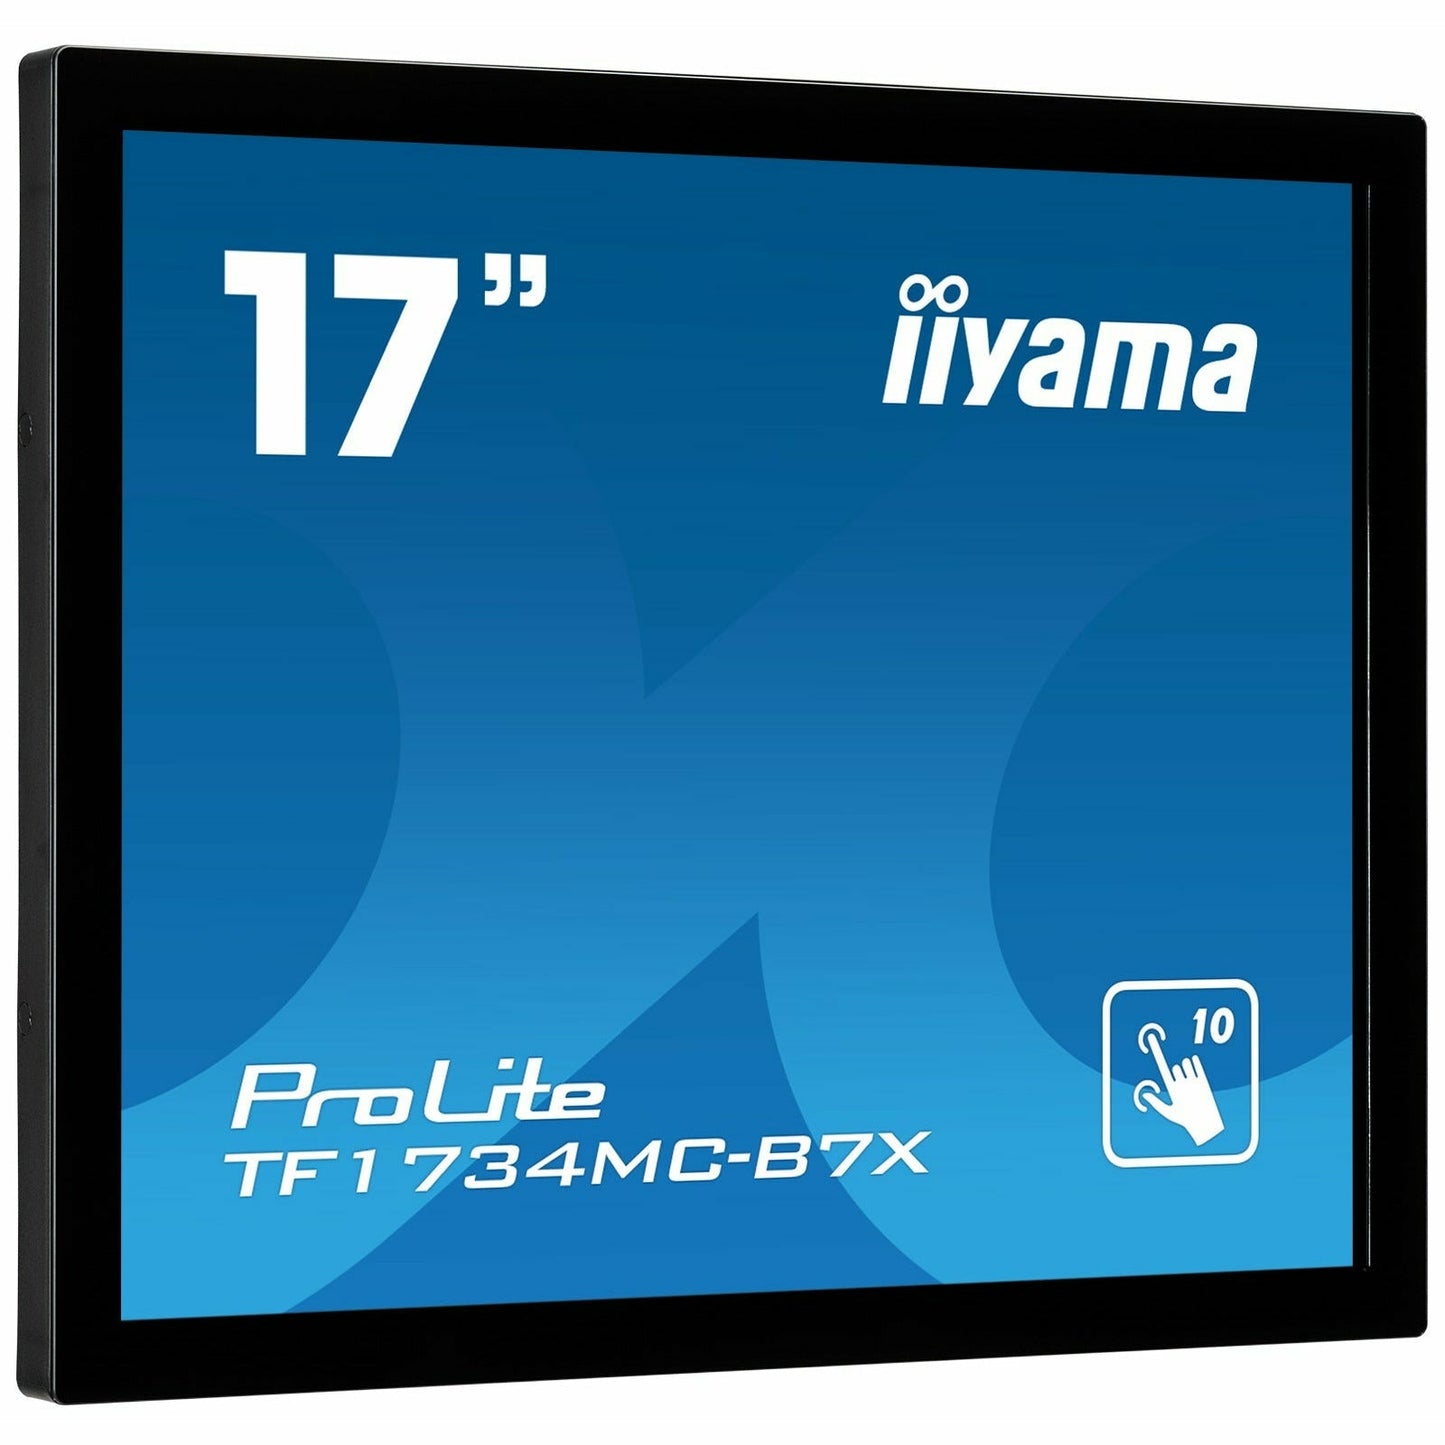 Dark Cyan iiyama ProLite TF1734MC-B7X 17" Capacitive Touch Screen Display